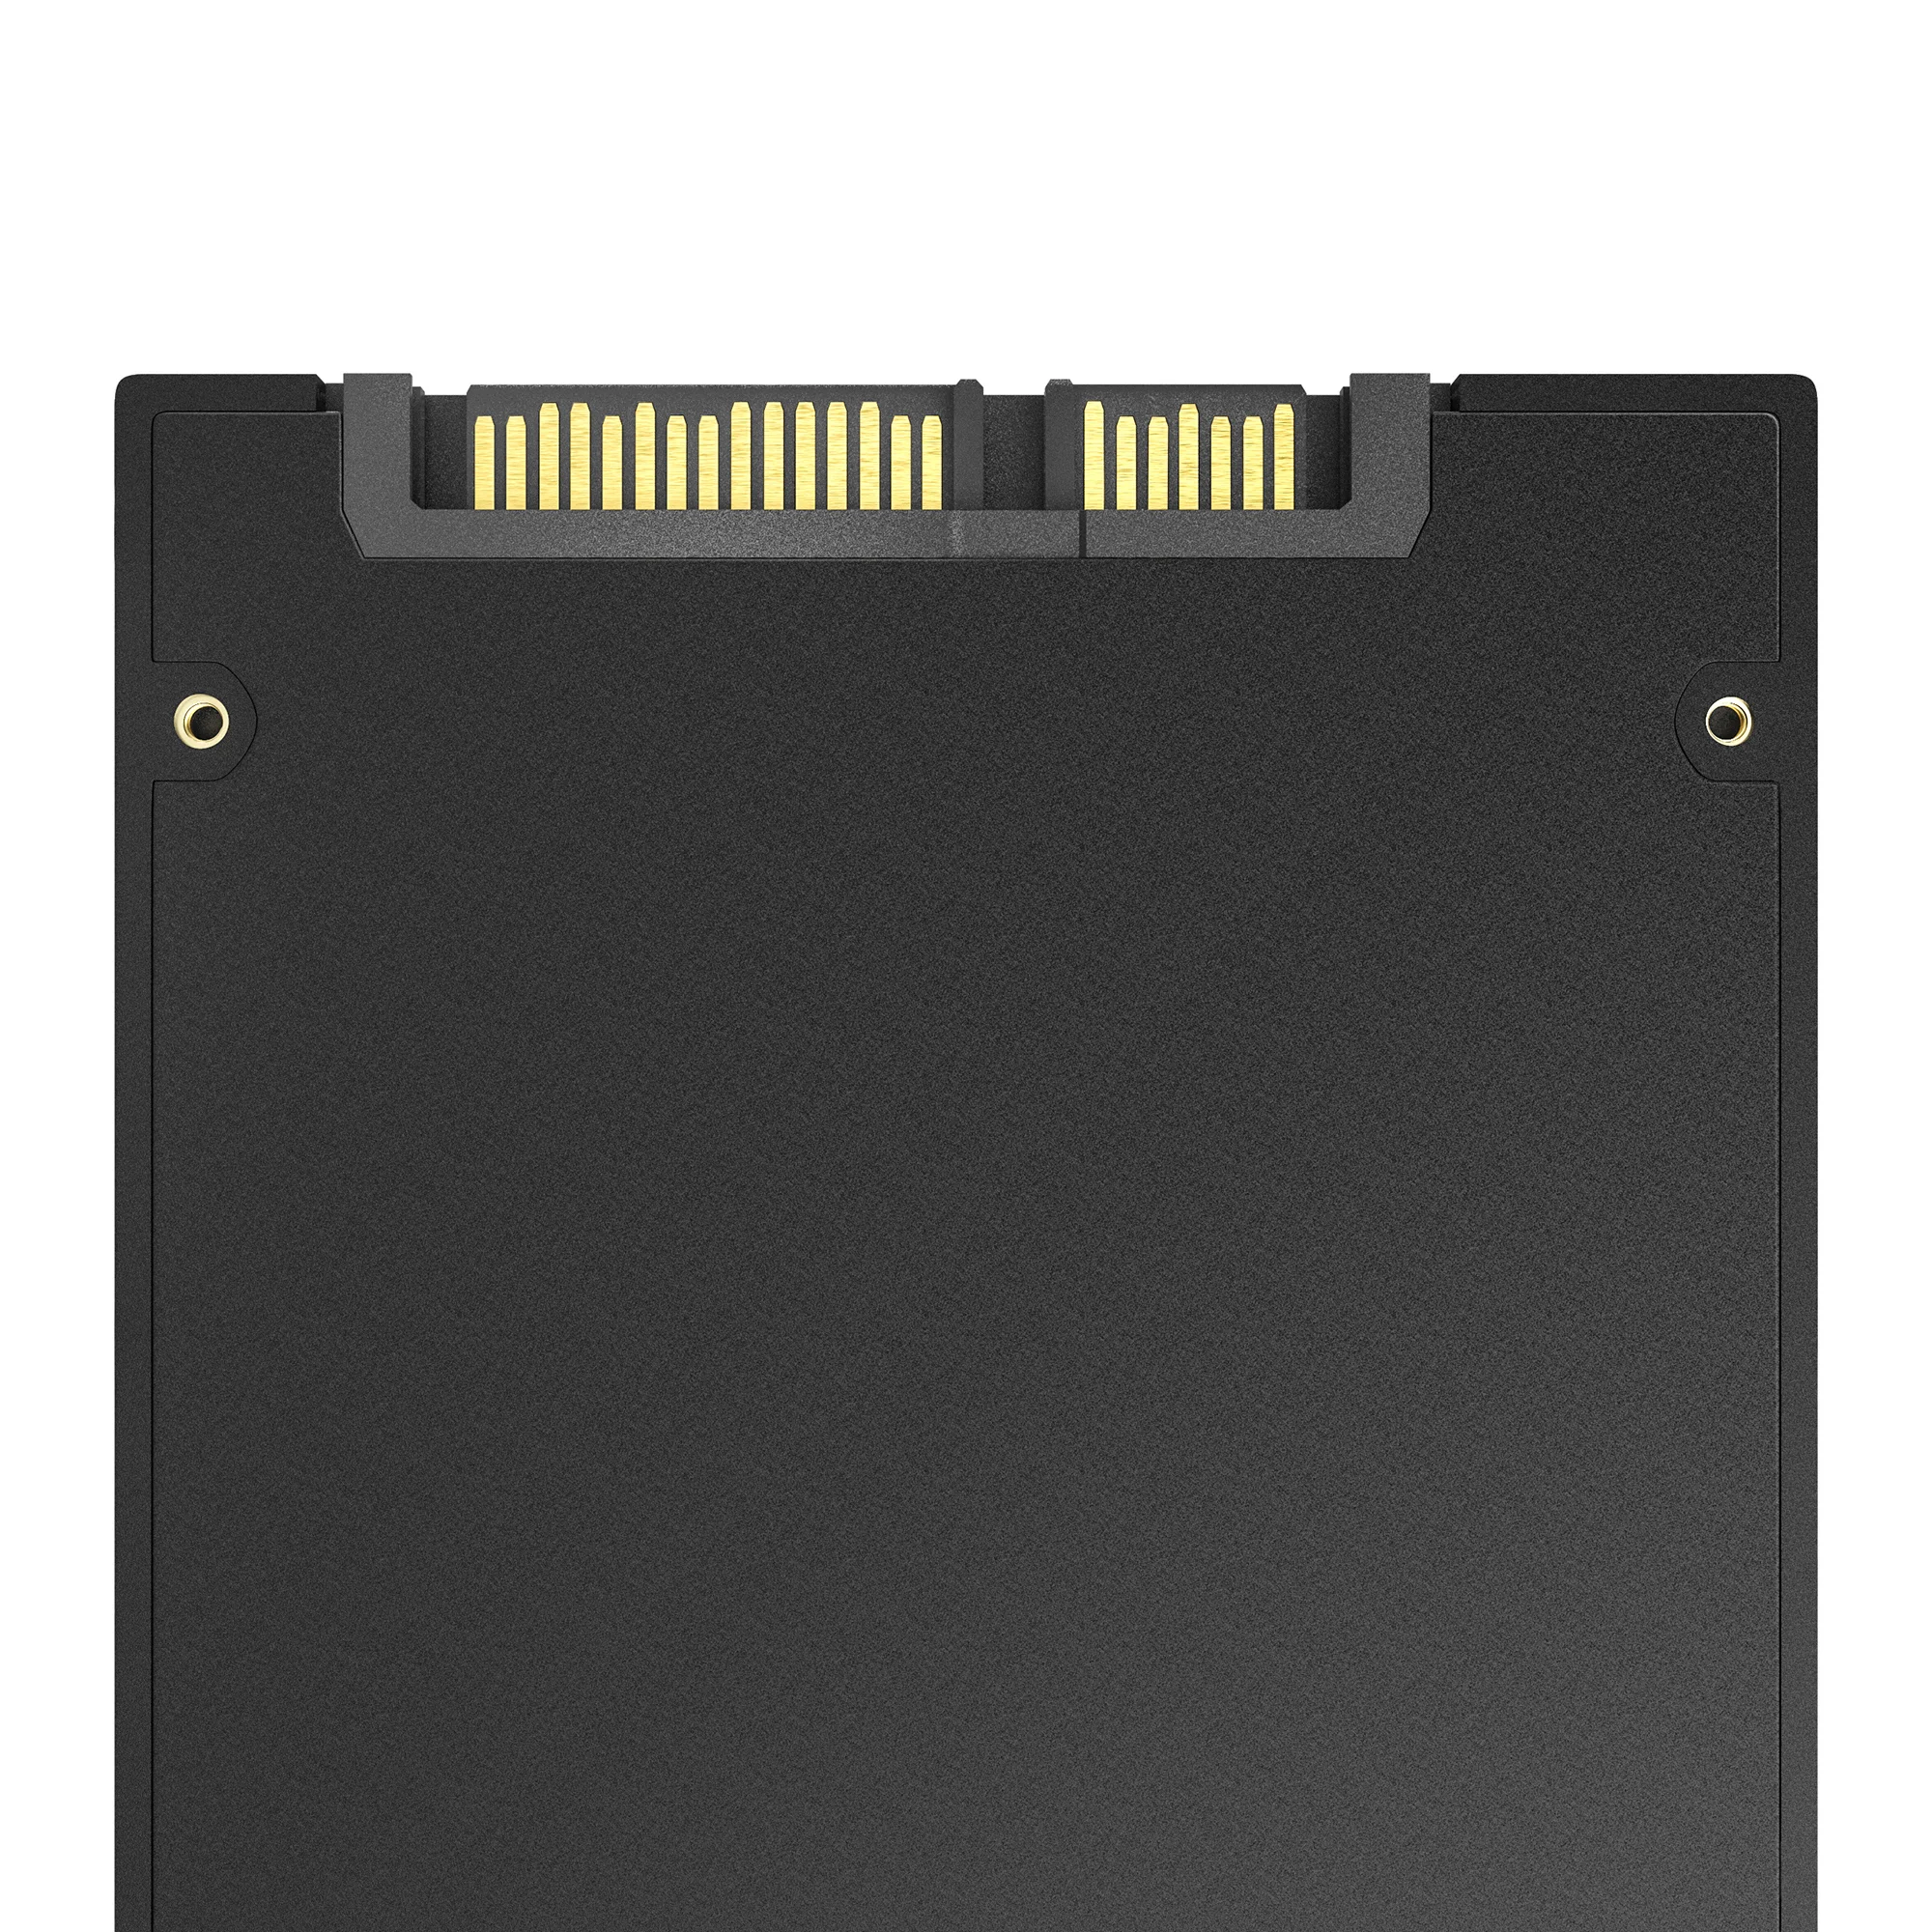 Taifast Hard Drives hdd ssd 2.5 inch sata hard disk internal hard disk 1tb 2tb 500gb 480gb 240gb 128 240gb 1 tb for laptop images - 6